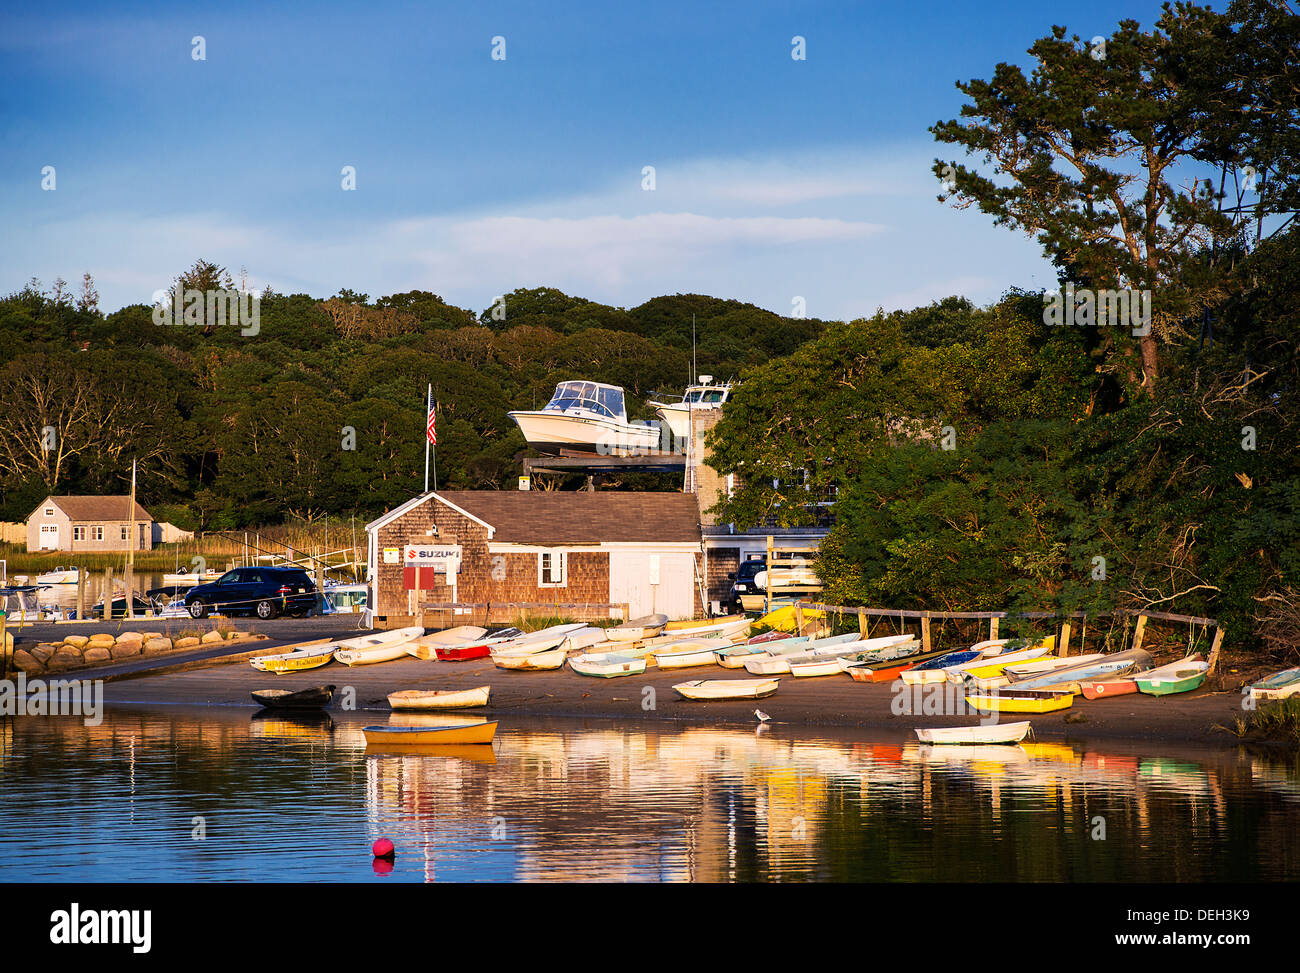 Ryders Cove Boat Yard, Chatham, Cape Cod, Massachusetts, USA Banque D'Images